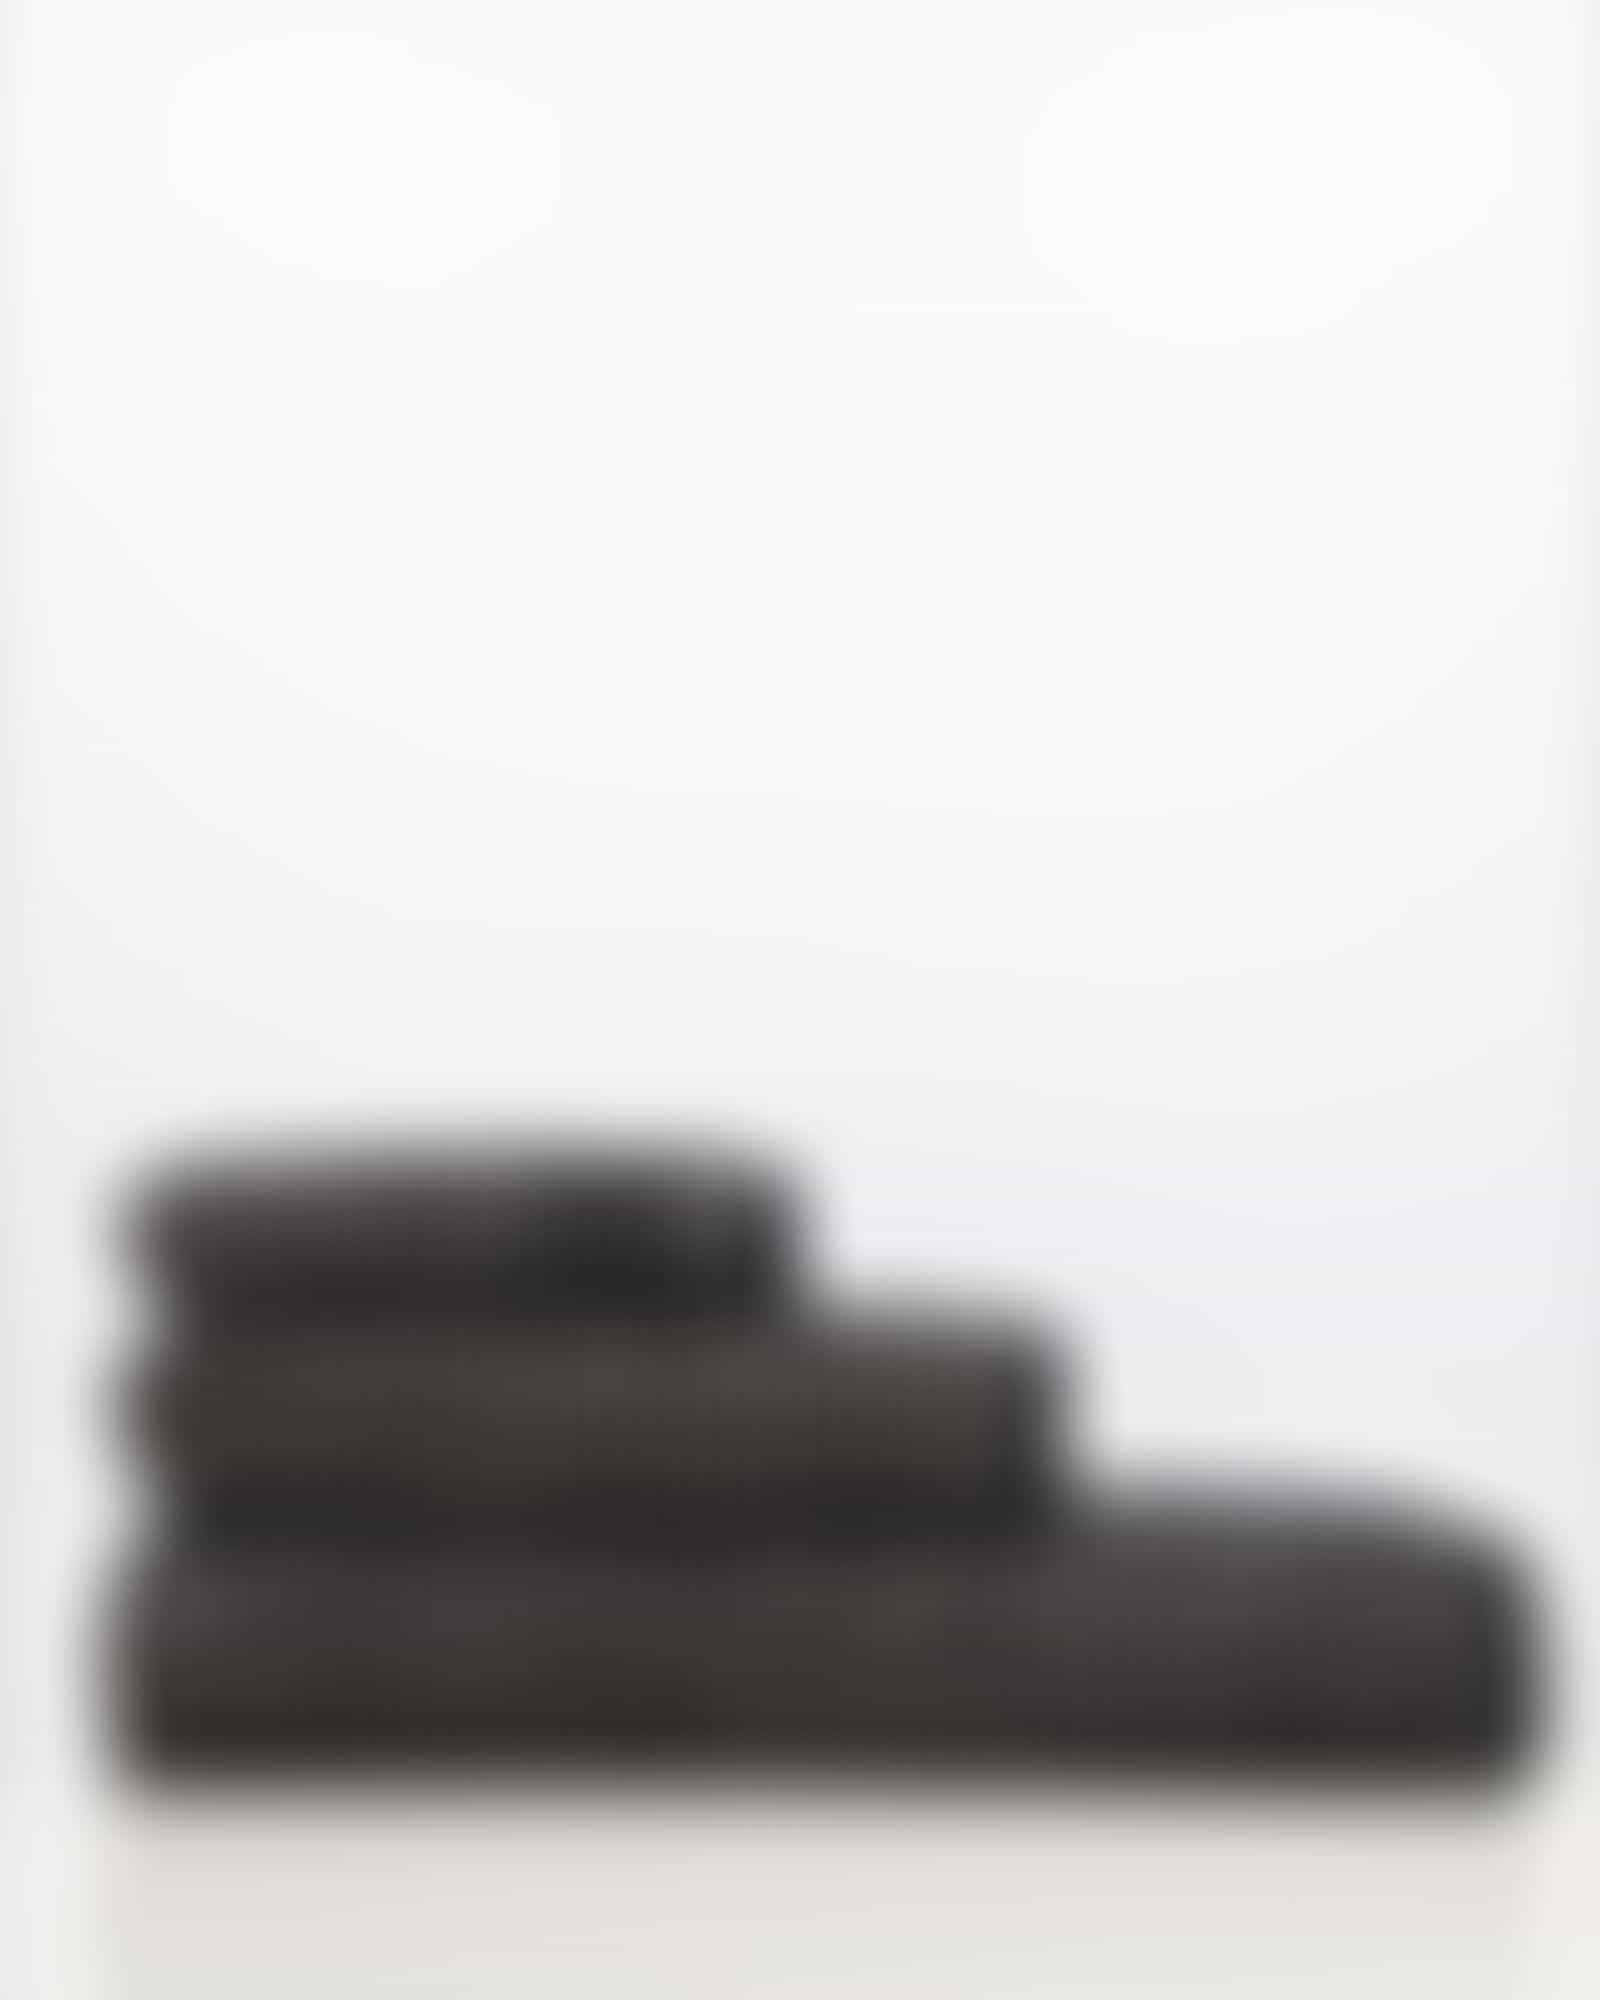 JOOP! Handtücher Select Allover 1695 - Farbe: ebony - 39 - Handtuch 50x100 cm Detailbild 3